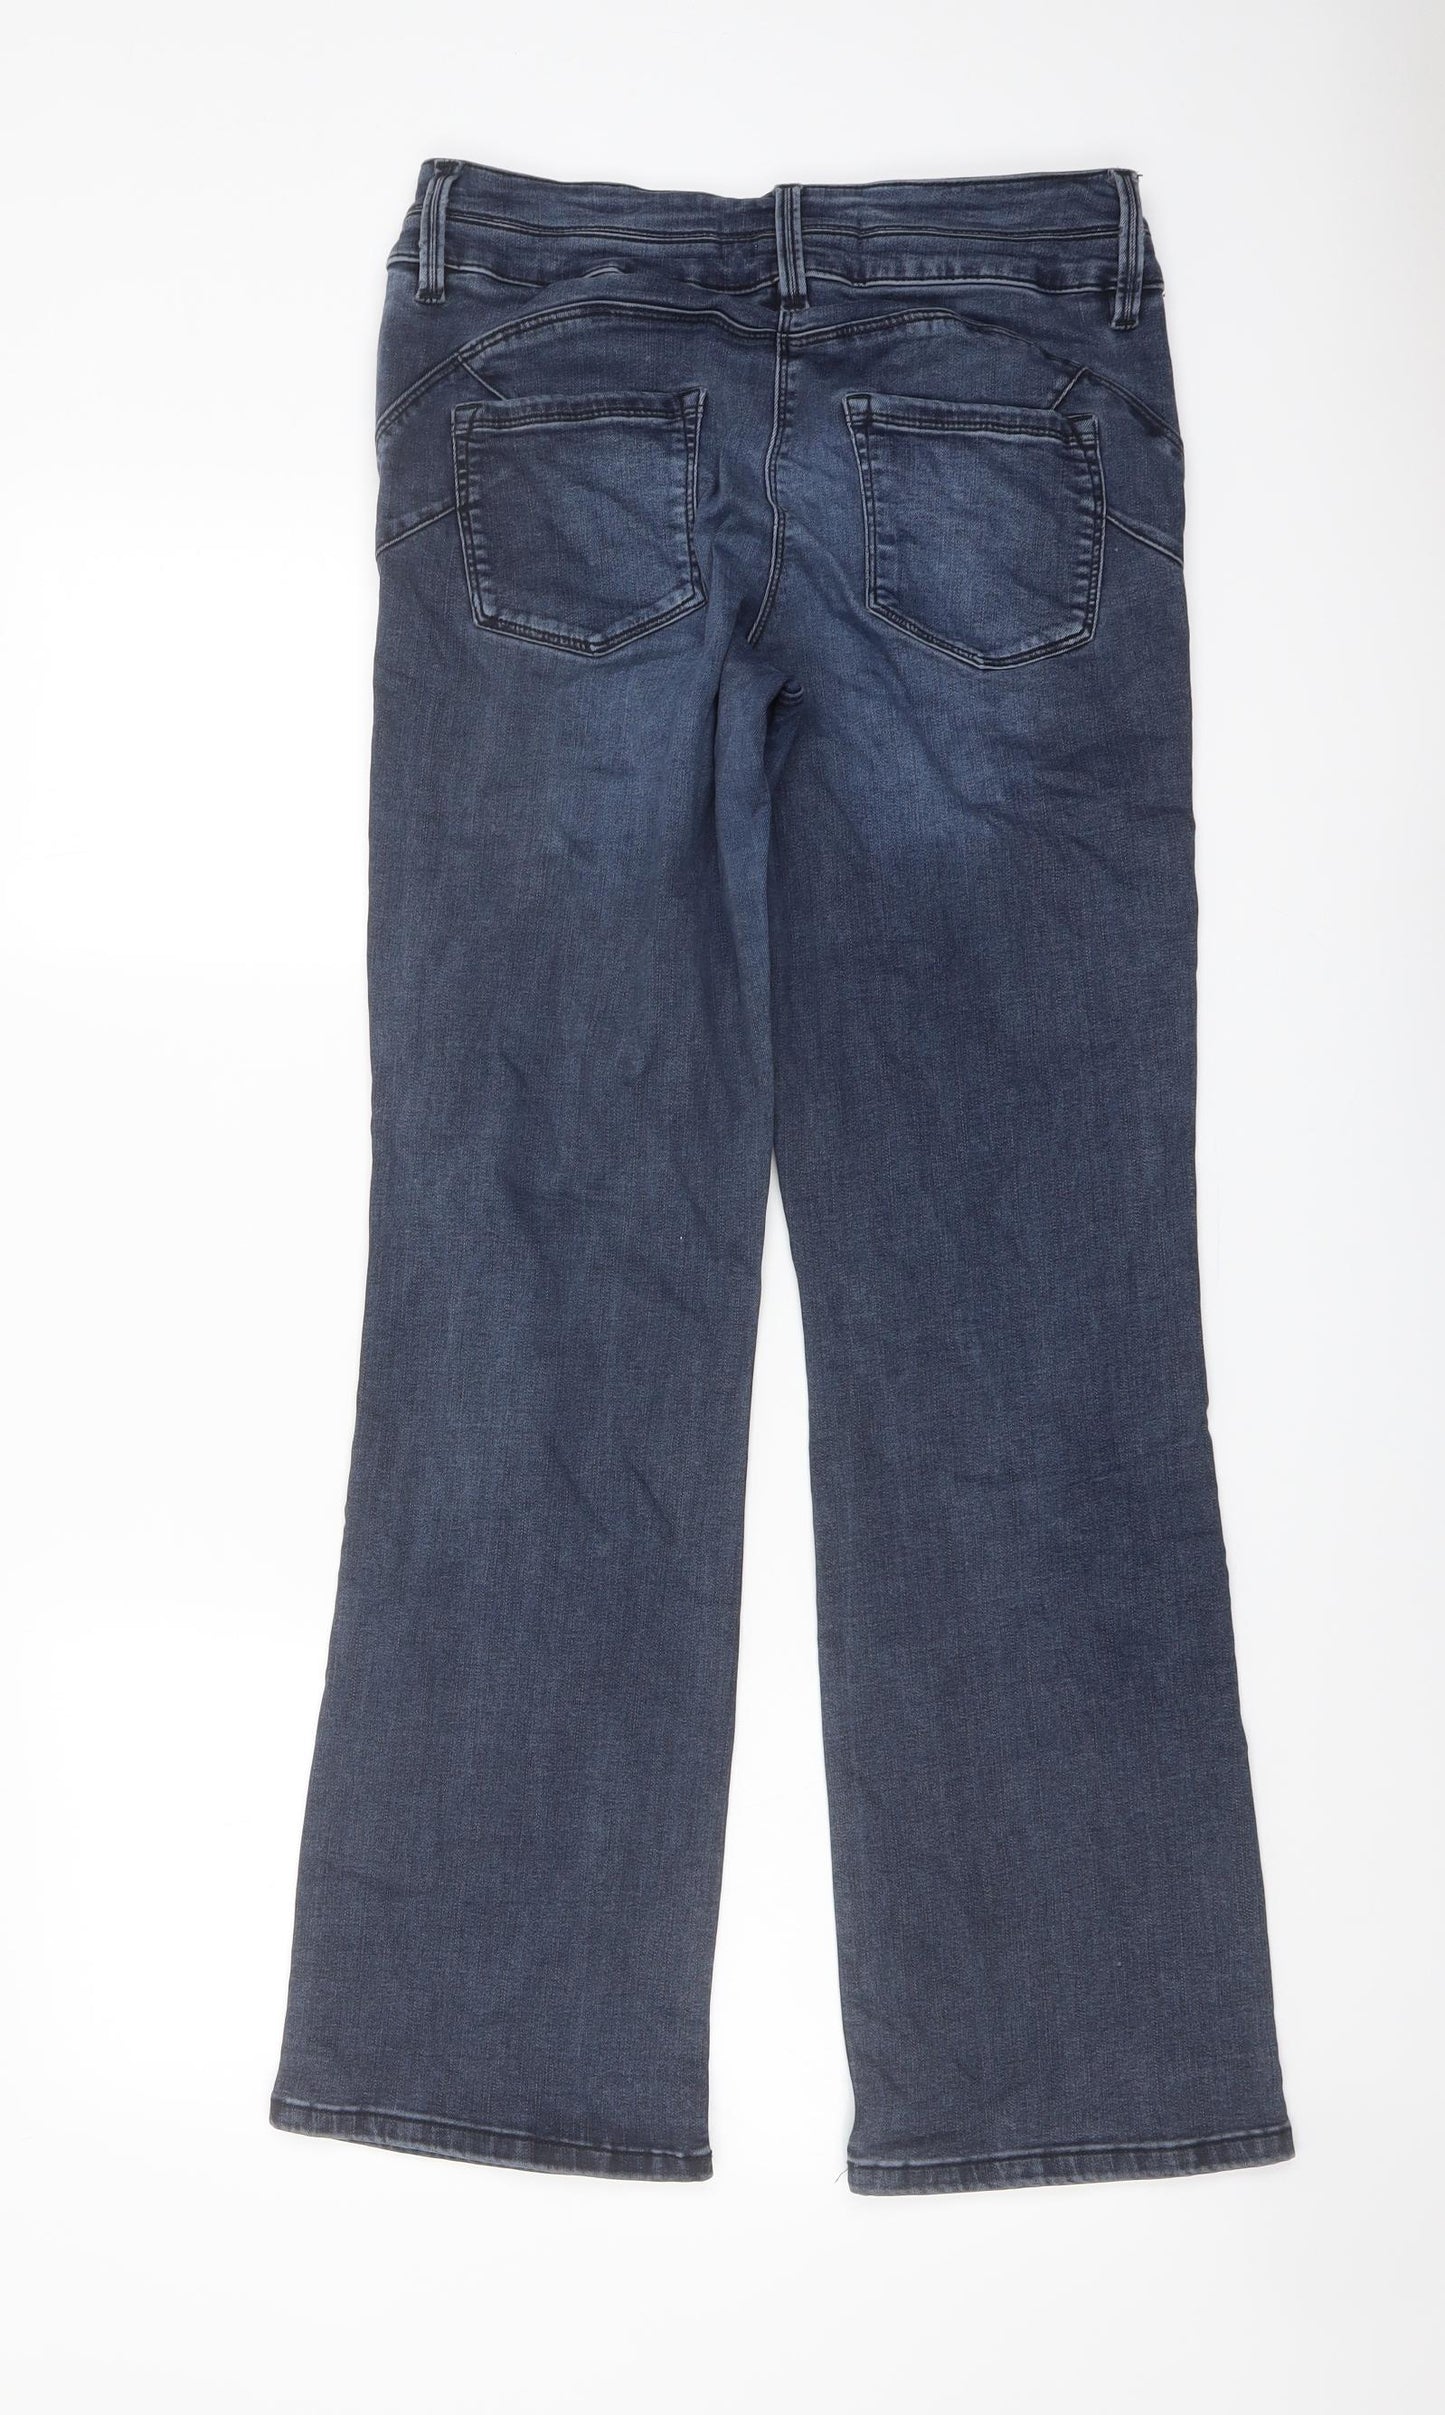 NEXT Womens Blue Cotton Bootcut Jeans Size 14 L30 in Regular Button